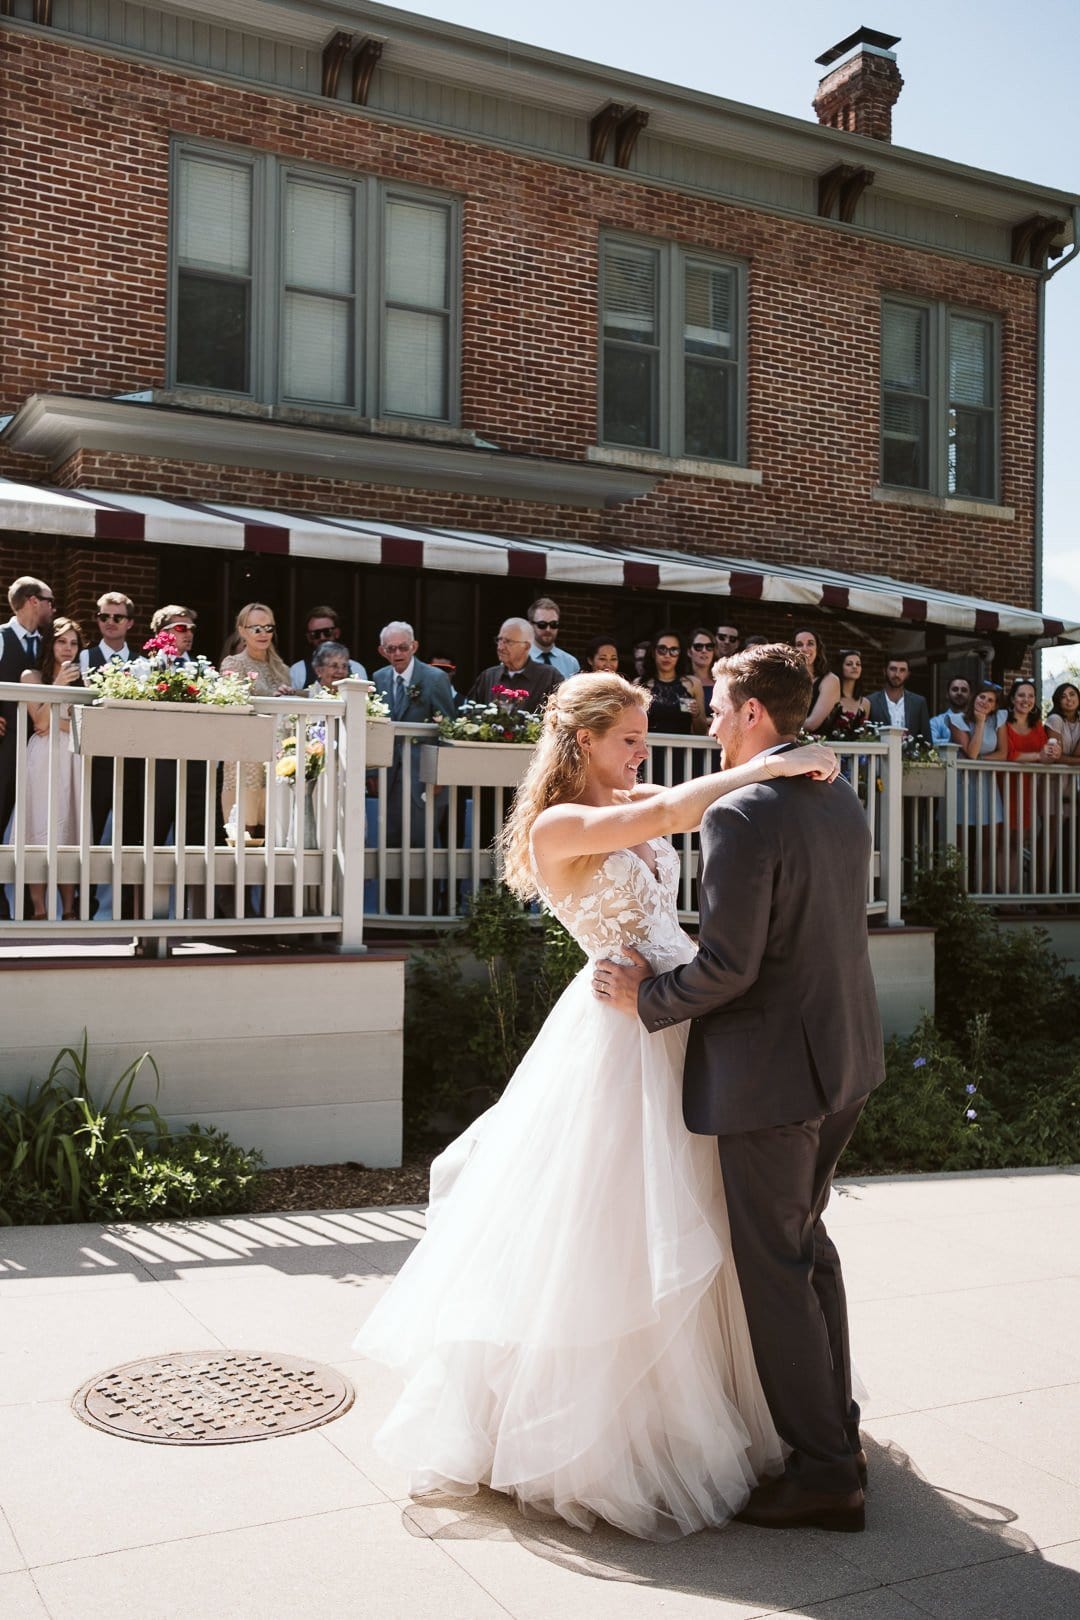 Bride and groom first dance outdoors in the sun at CU Koenig Alumni Center wedding, Boulder wedding photographer